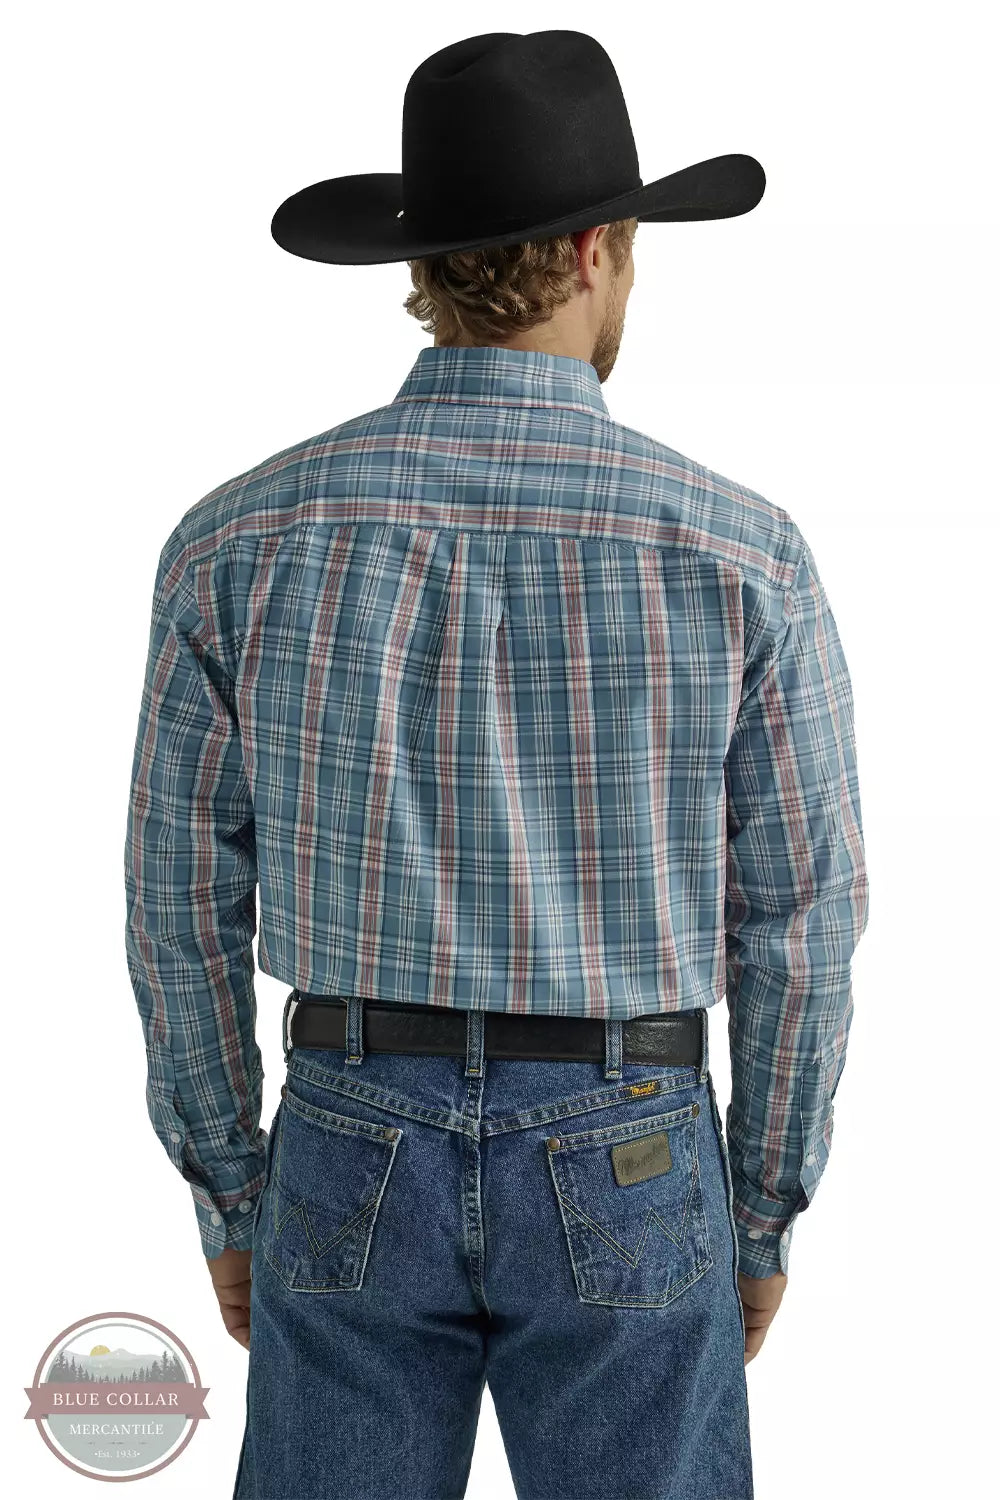 Wrangler 112331805 George Strait Long Sleeve Western Shirt in Steel Blue Plaid Back View